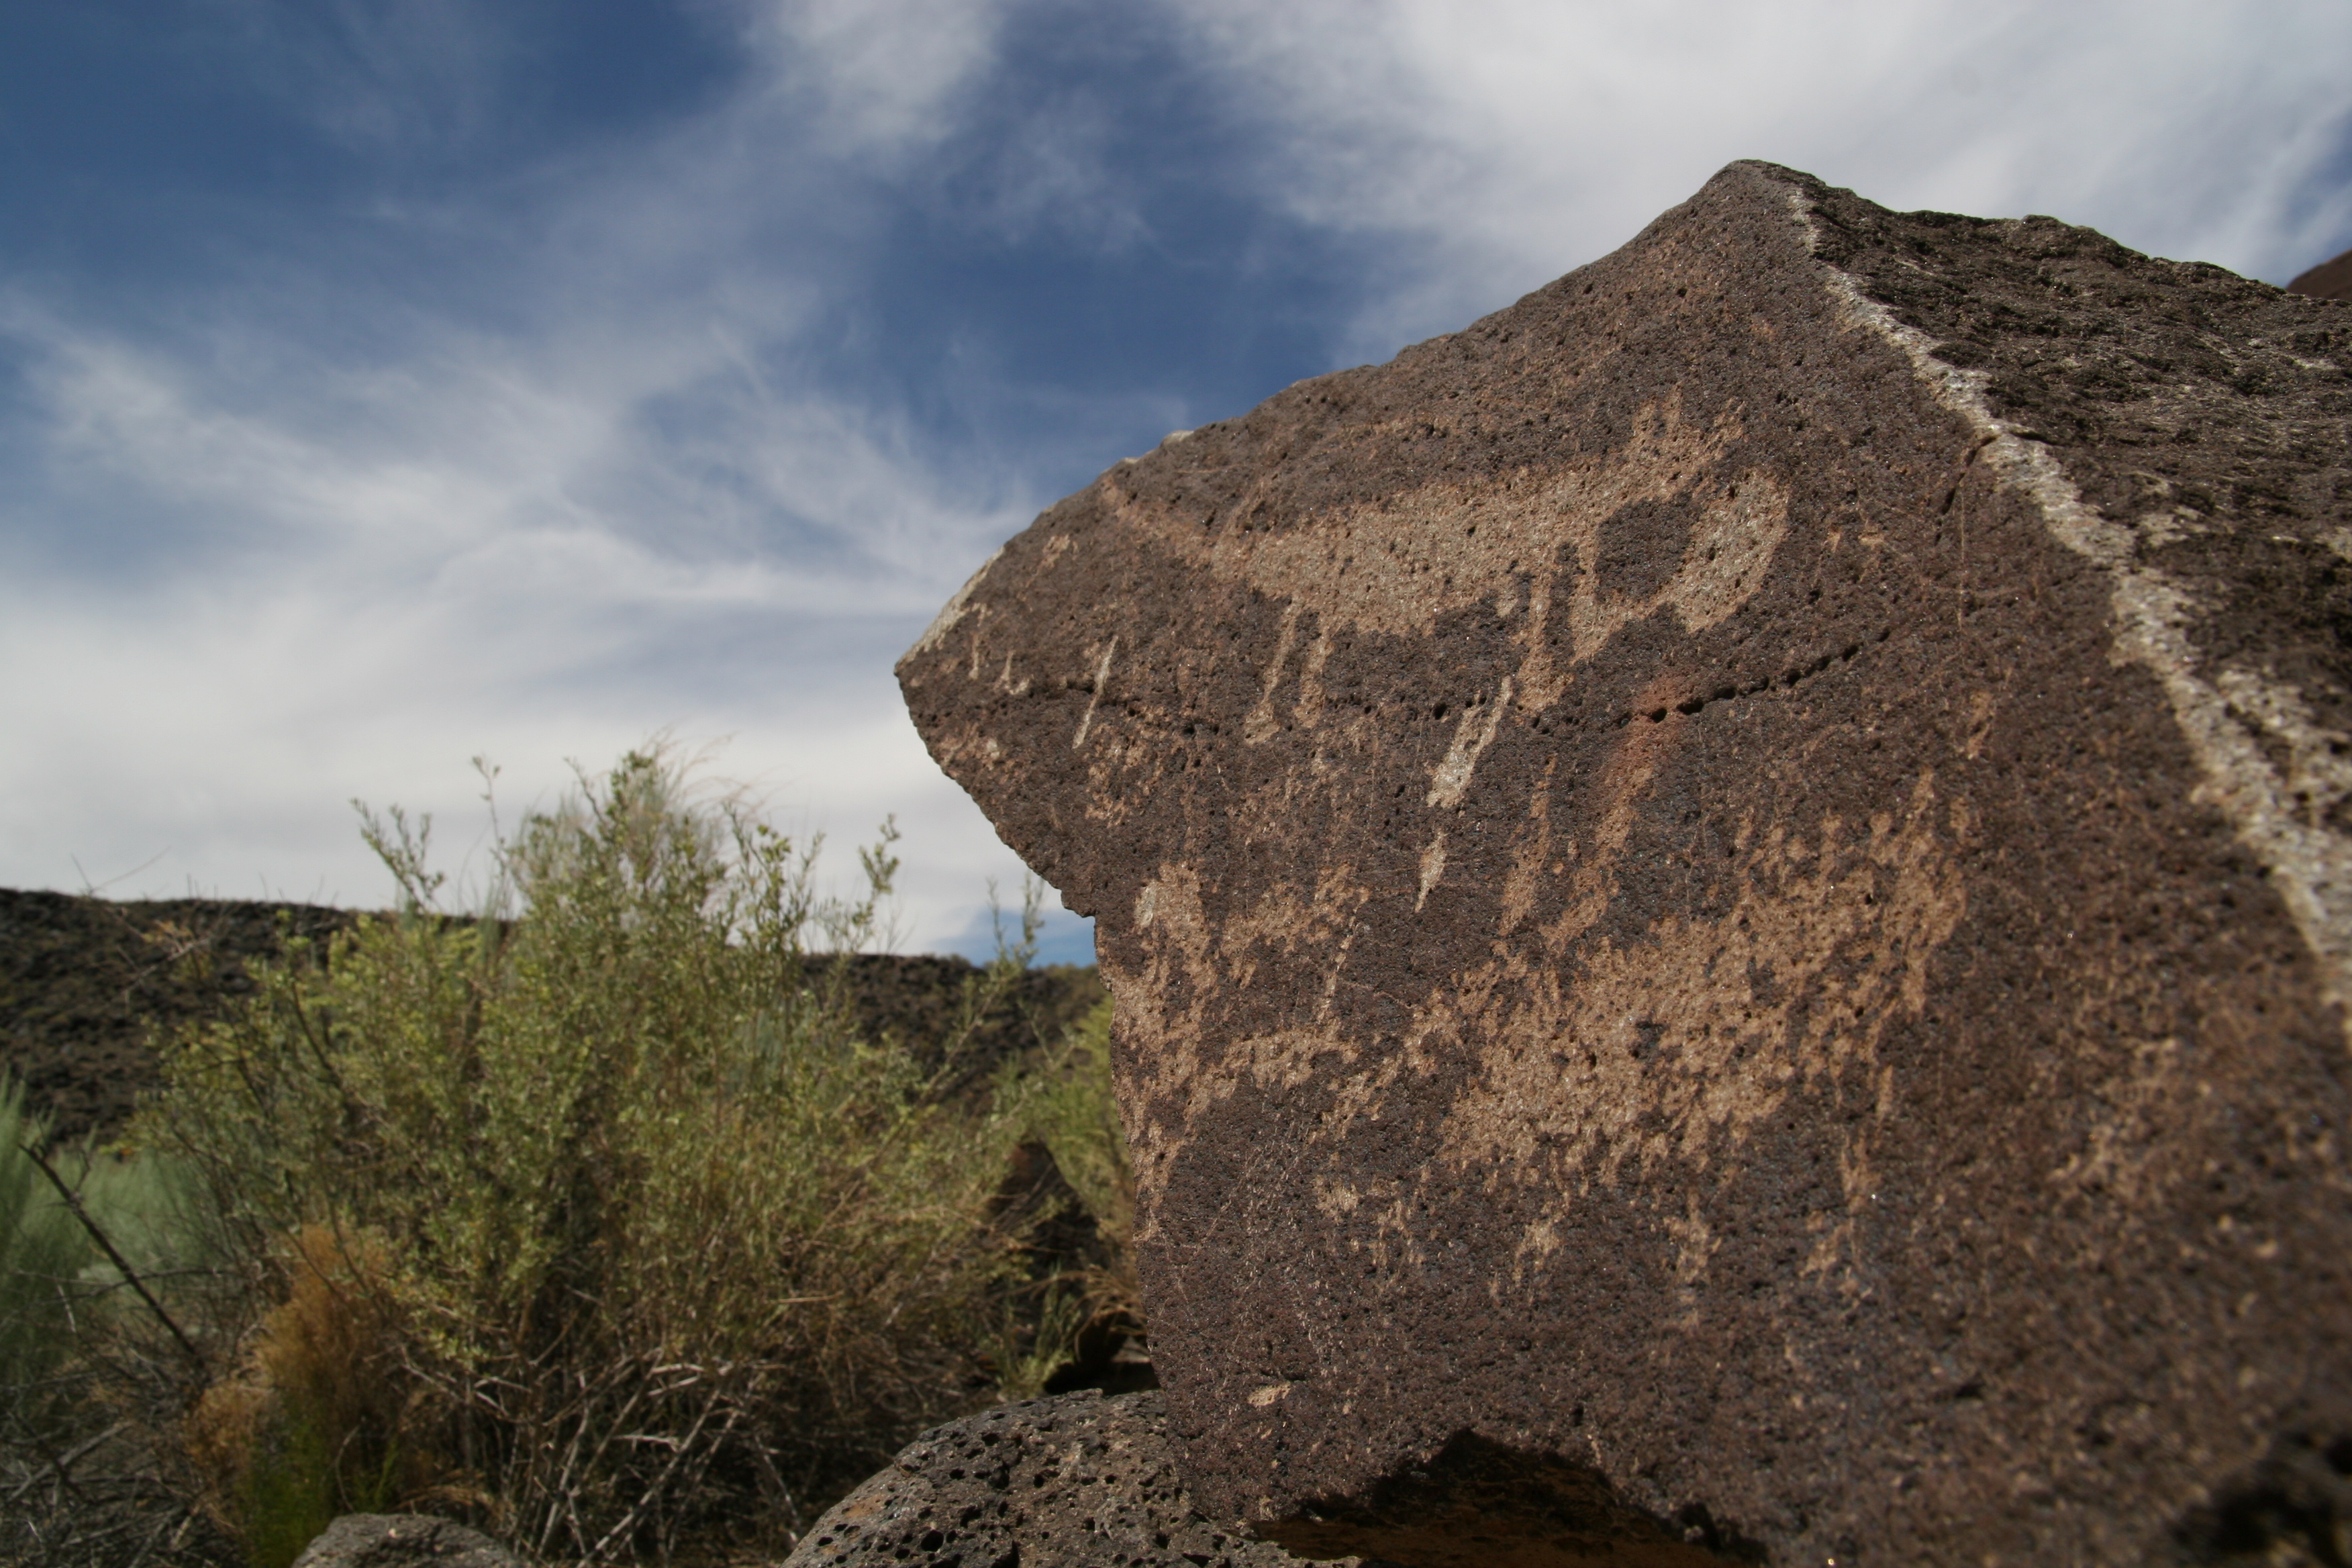 Petroglyph of a small mammal along the Mesa Point Trail in Boca Negra Canyon.